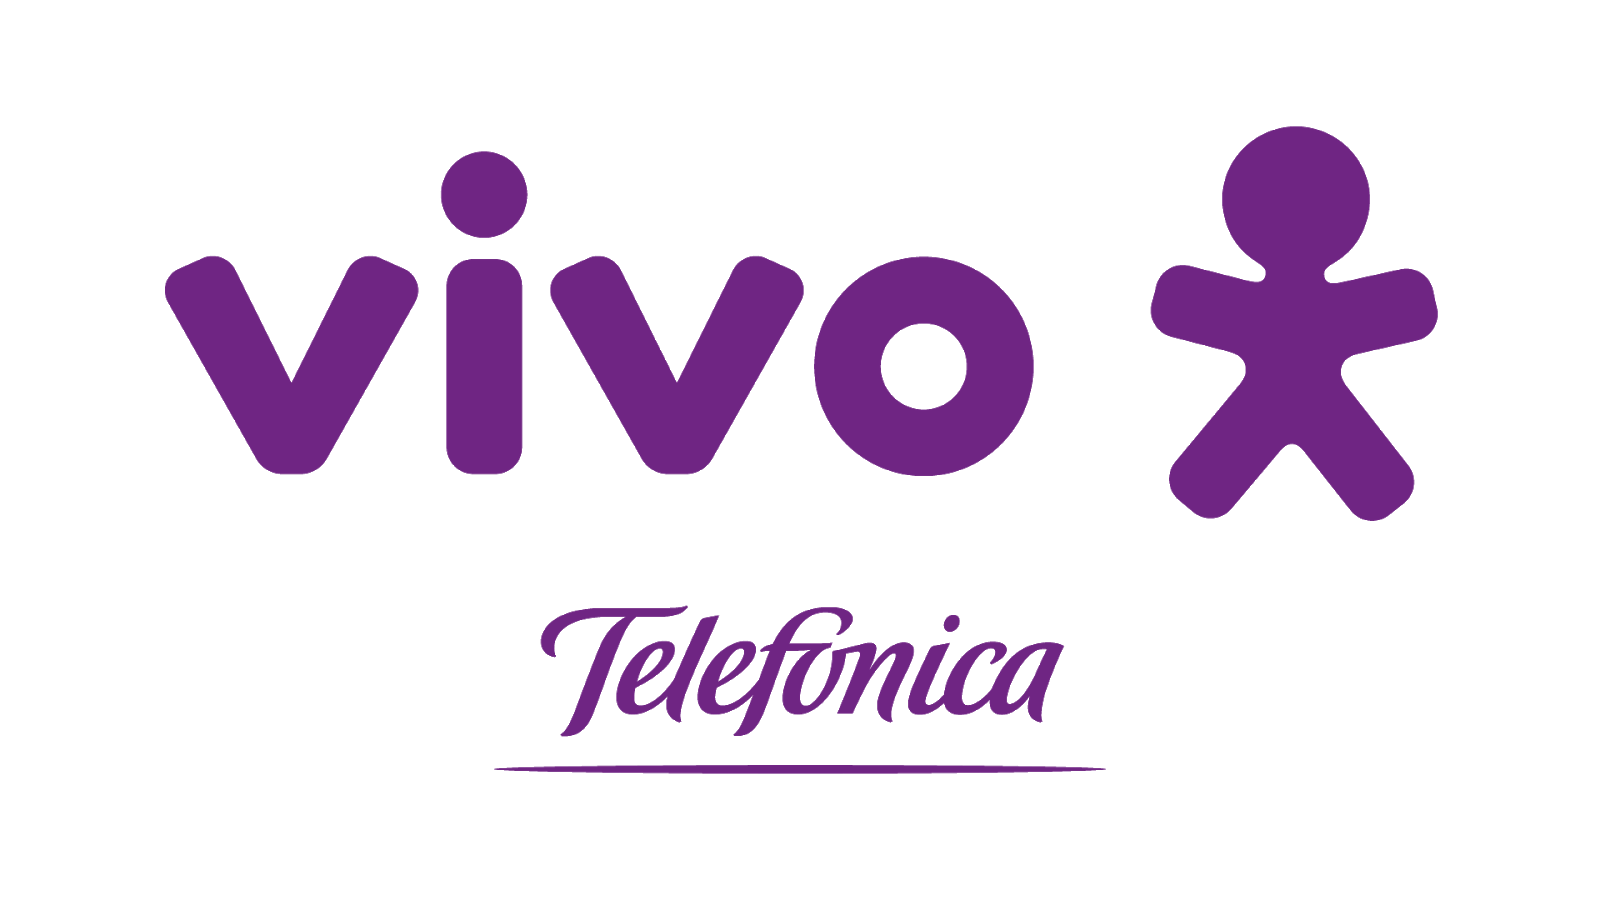 Vivo Telefonica logo